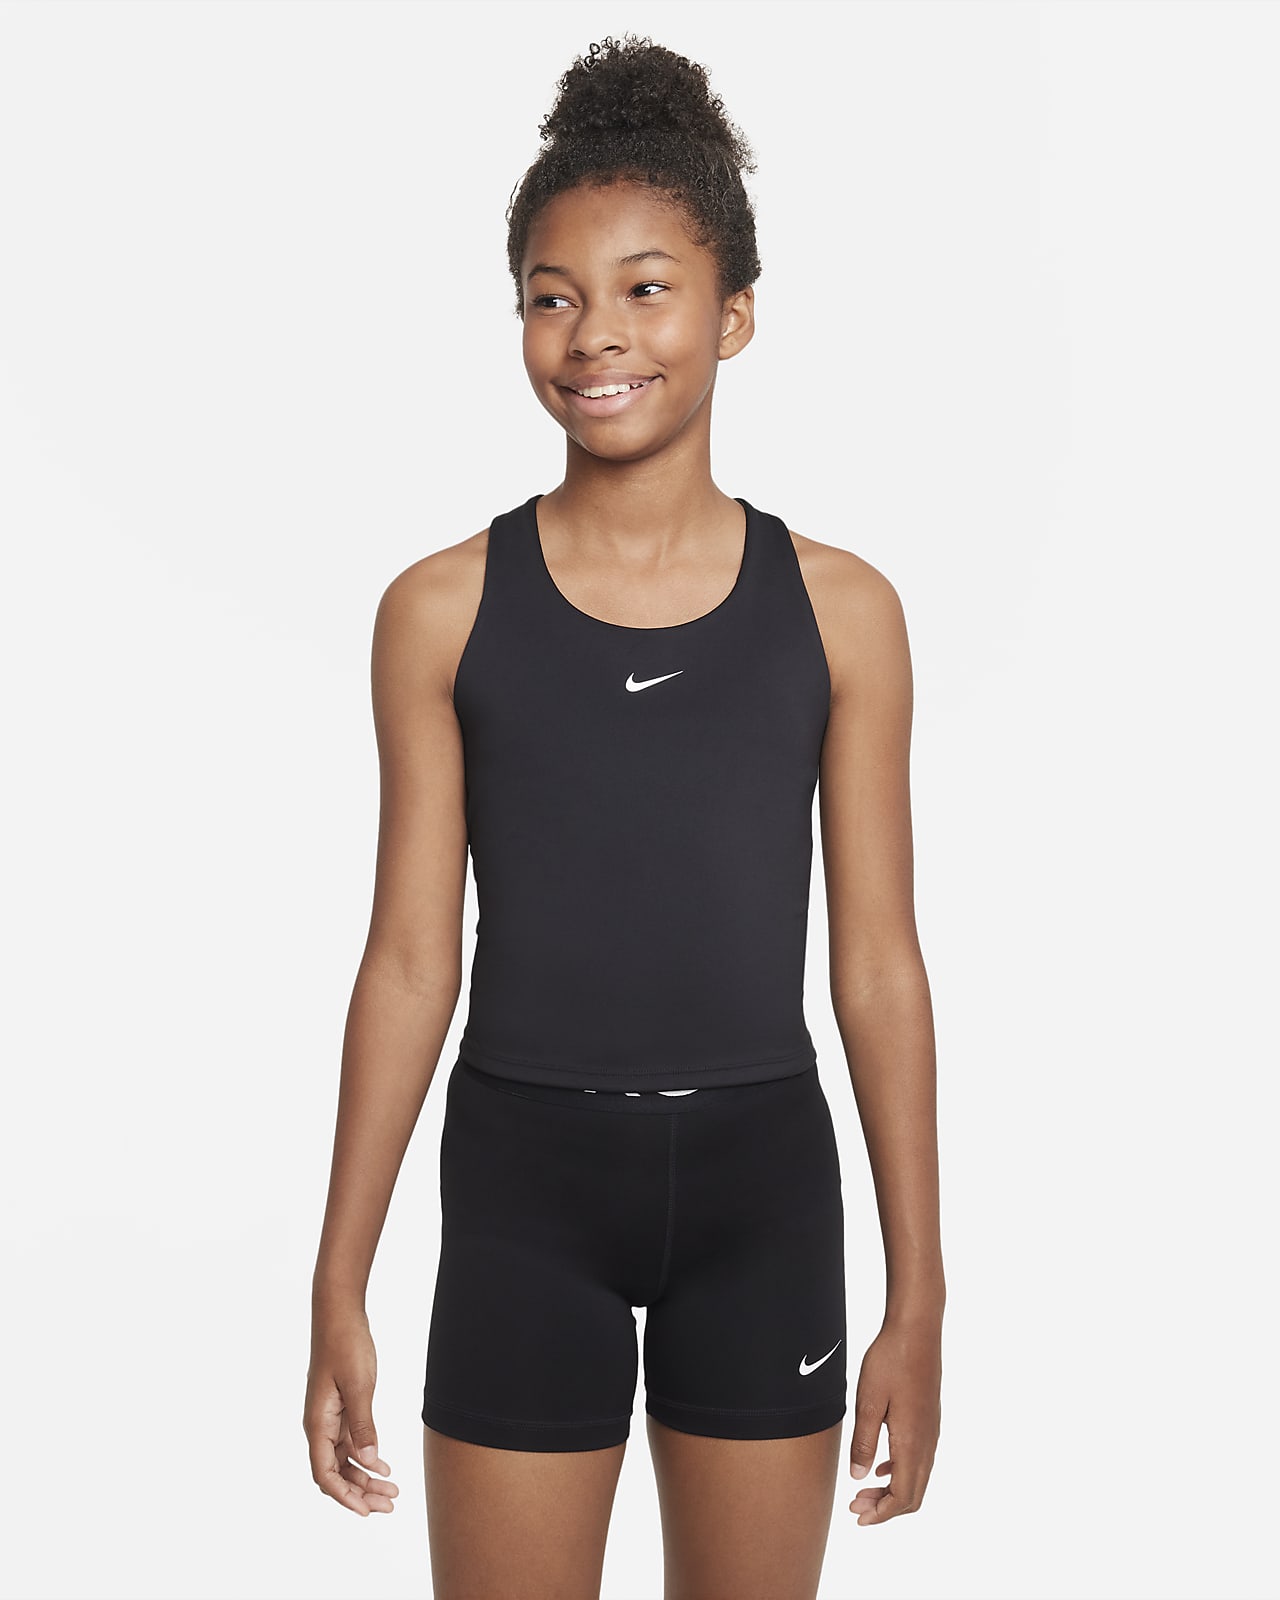 Girls' Sports Bras. Nike SK